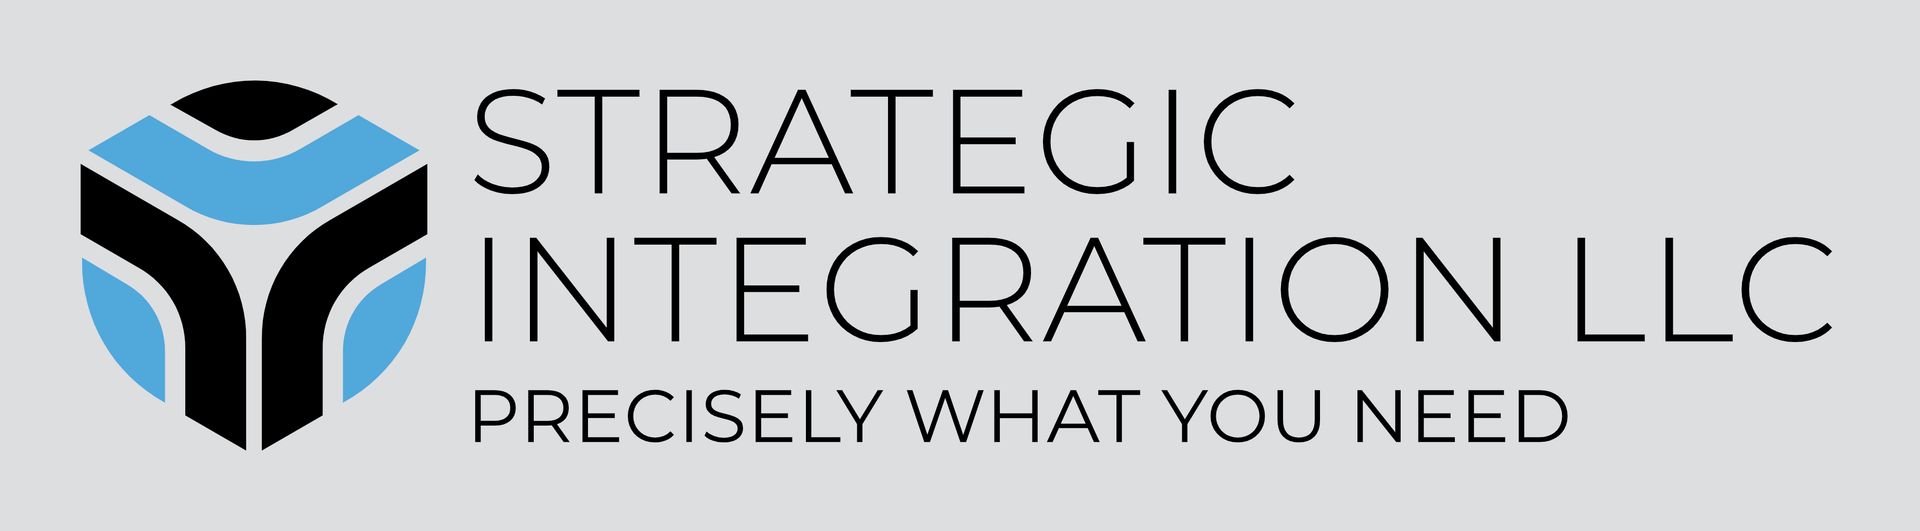 Strategic Integration LLC